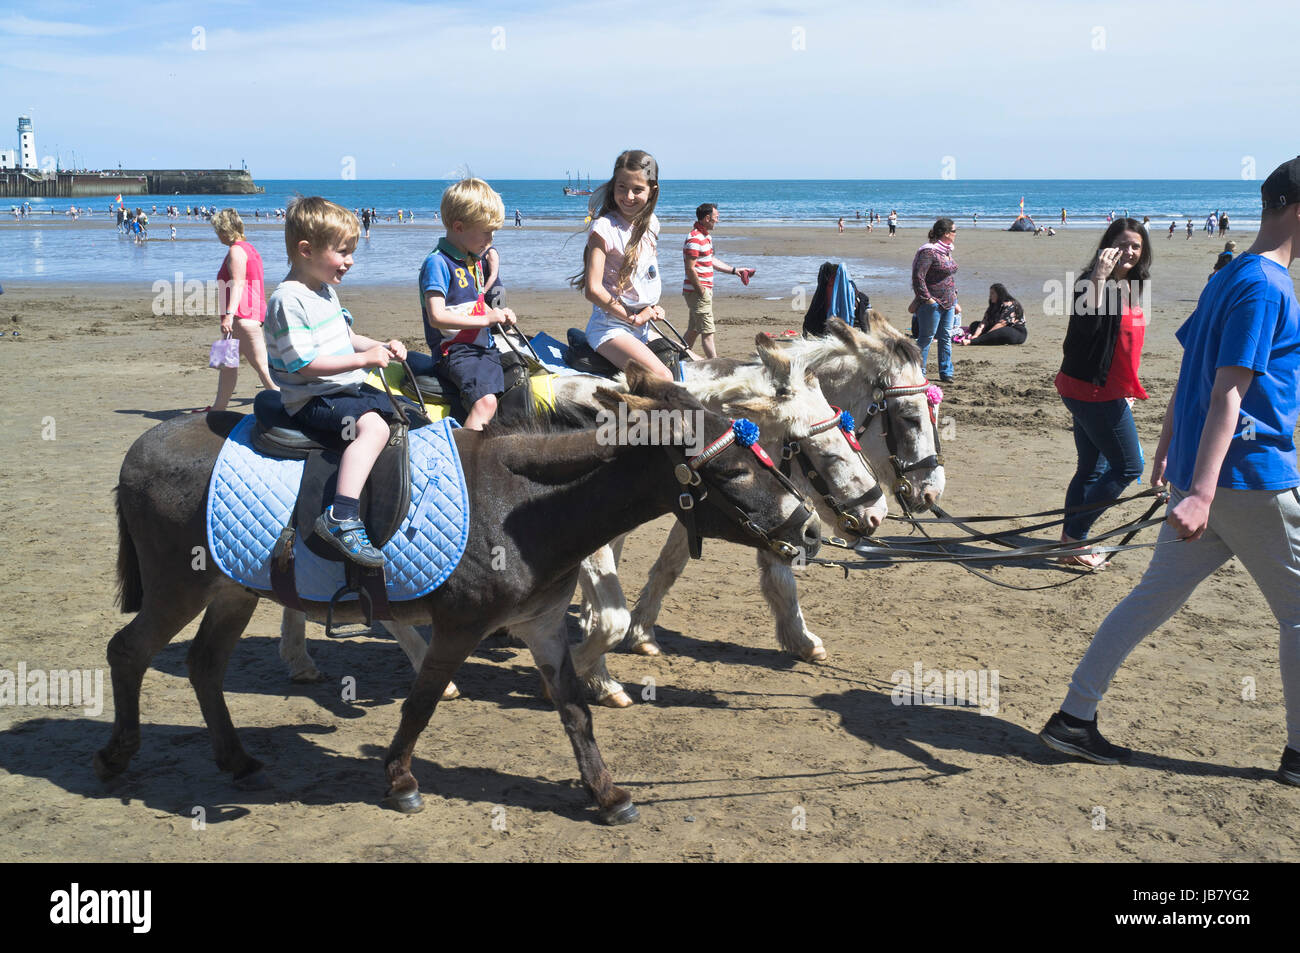 South Bay SCARBOROUGH NORTH YORKSHIRE donkey ride beach rides uk seaside Stock Photo